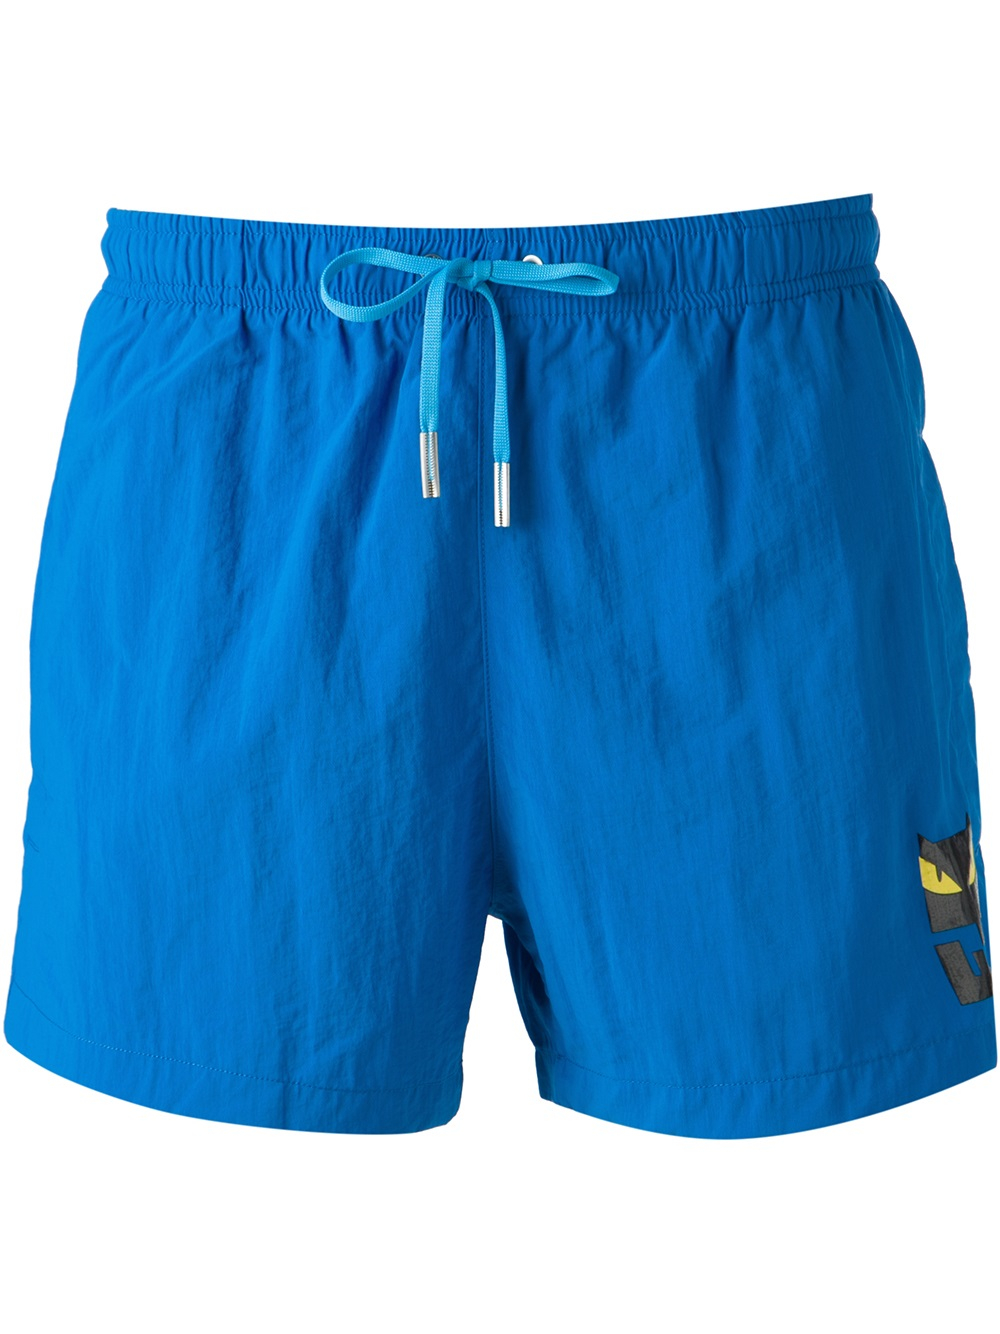 Lyst - Fendi Classic Swim Shorts in Blue for Men